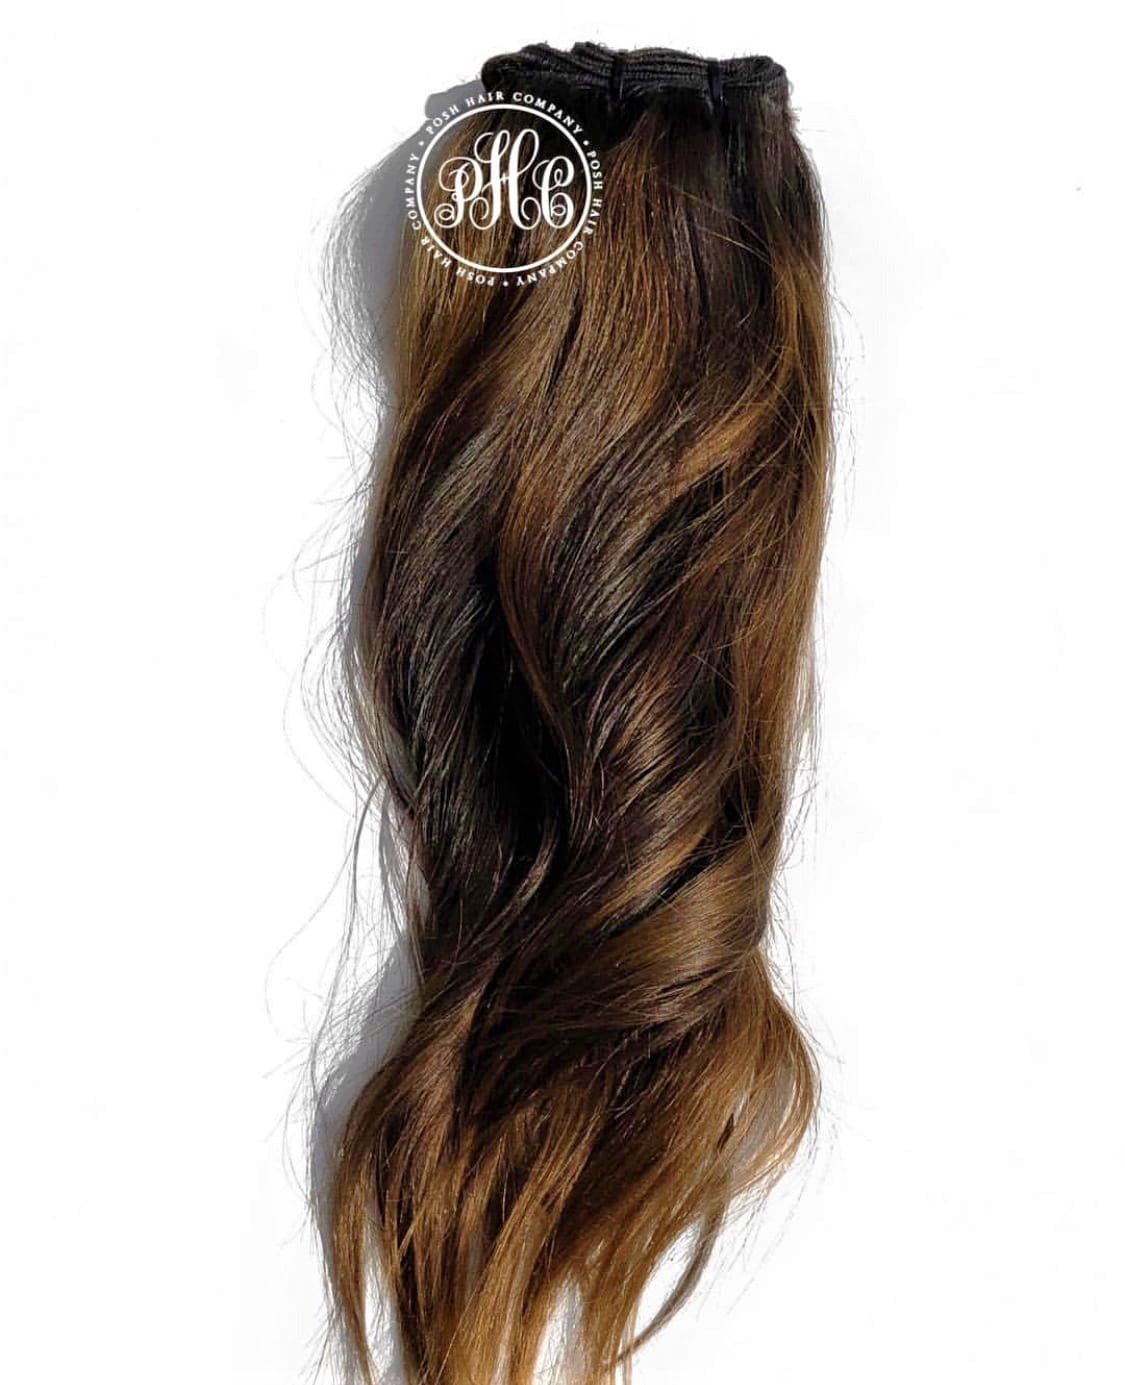 Medium Brown Wavy Human Hair Weft Bundle Extension